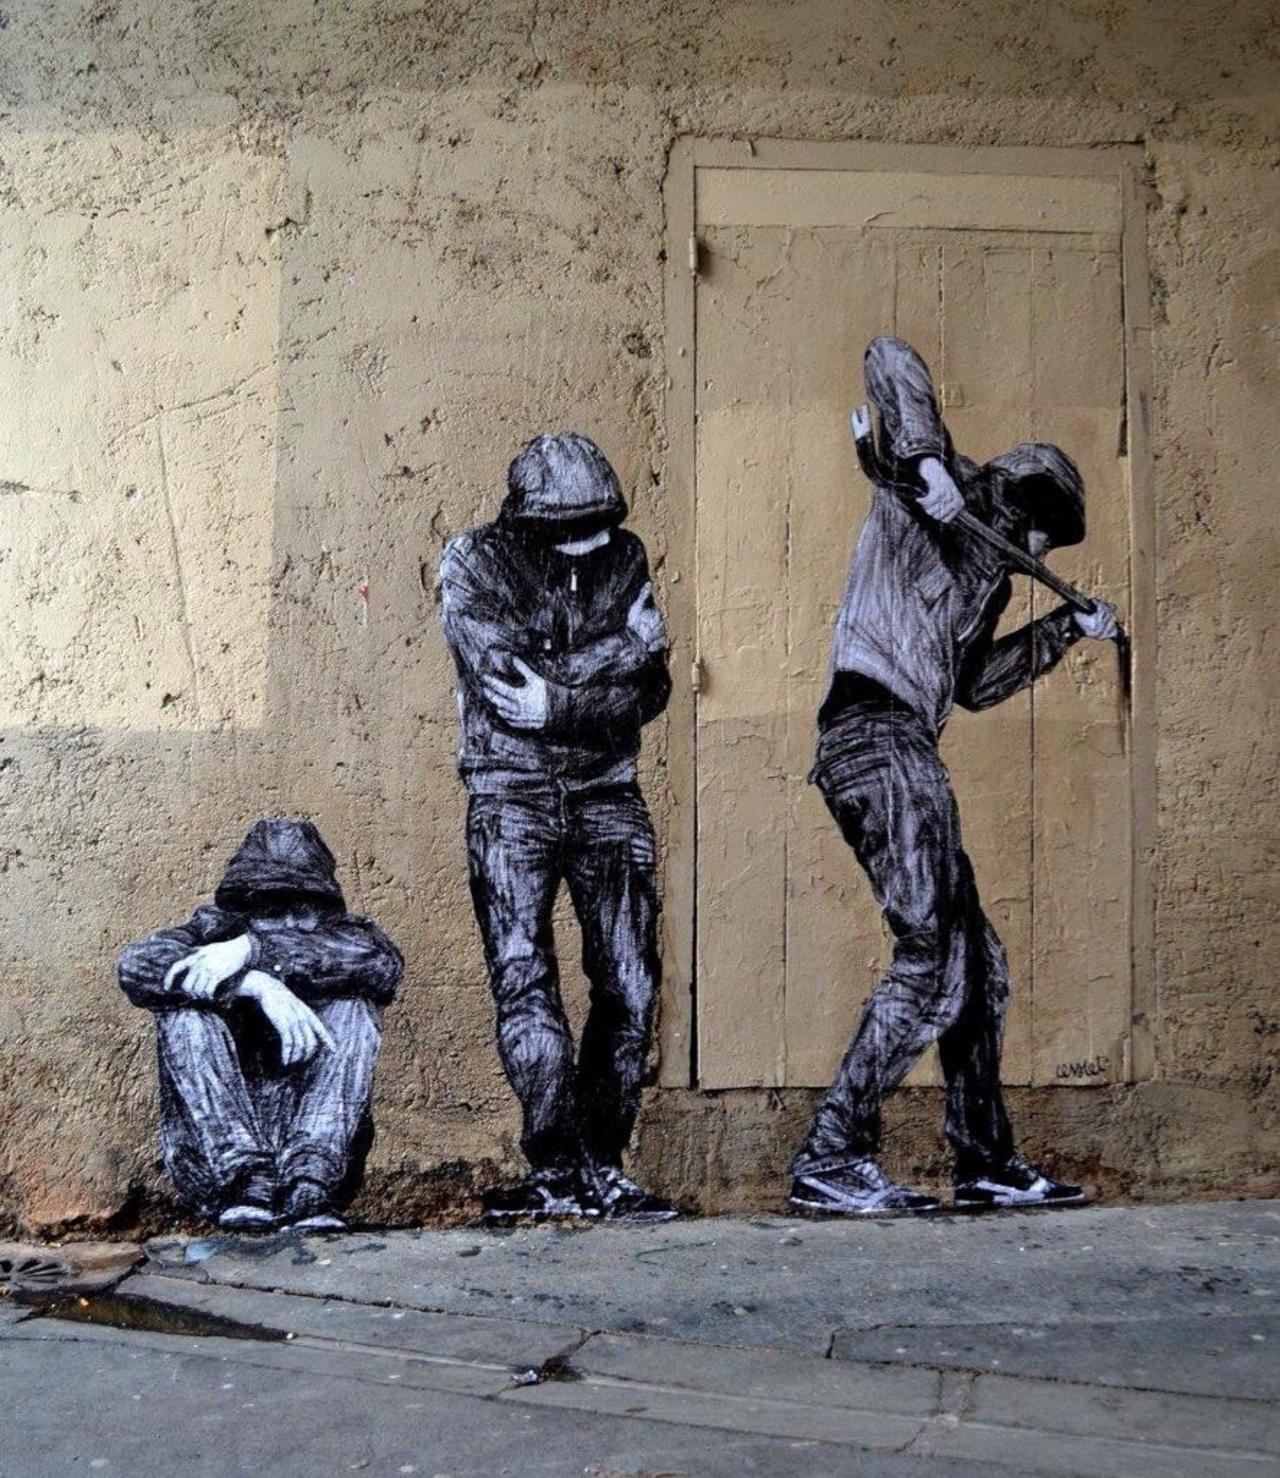 New Street Art by Levalet 
Portes ouvertes - Paris X

#art #arte #graffiti #streetart http://t.co/Y3jDWdd1Kt